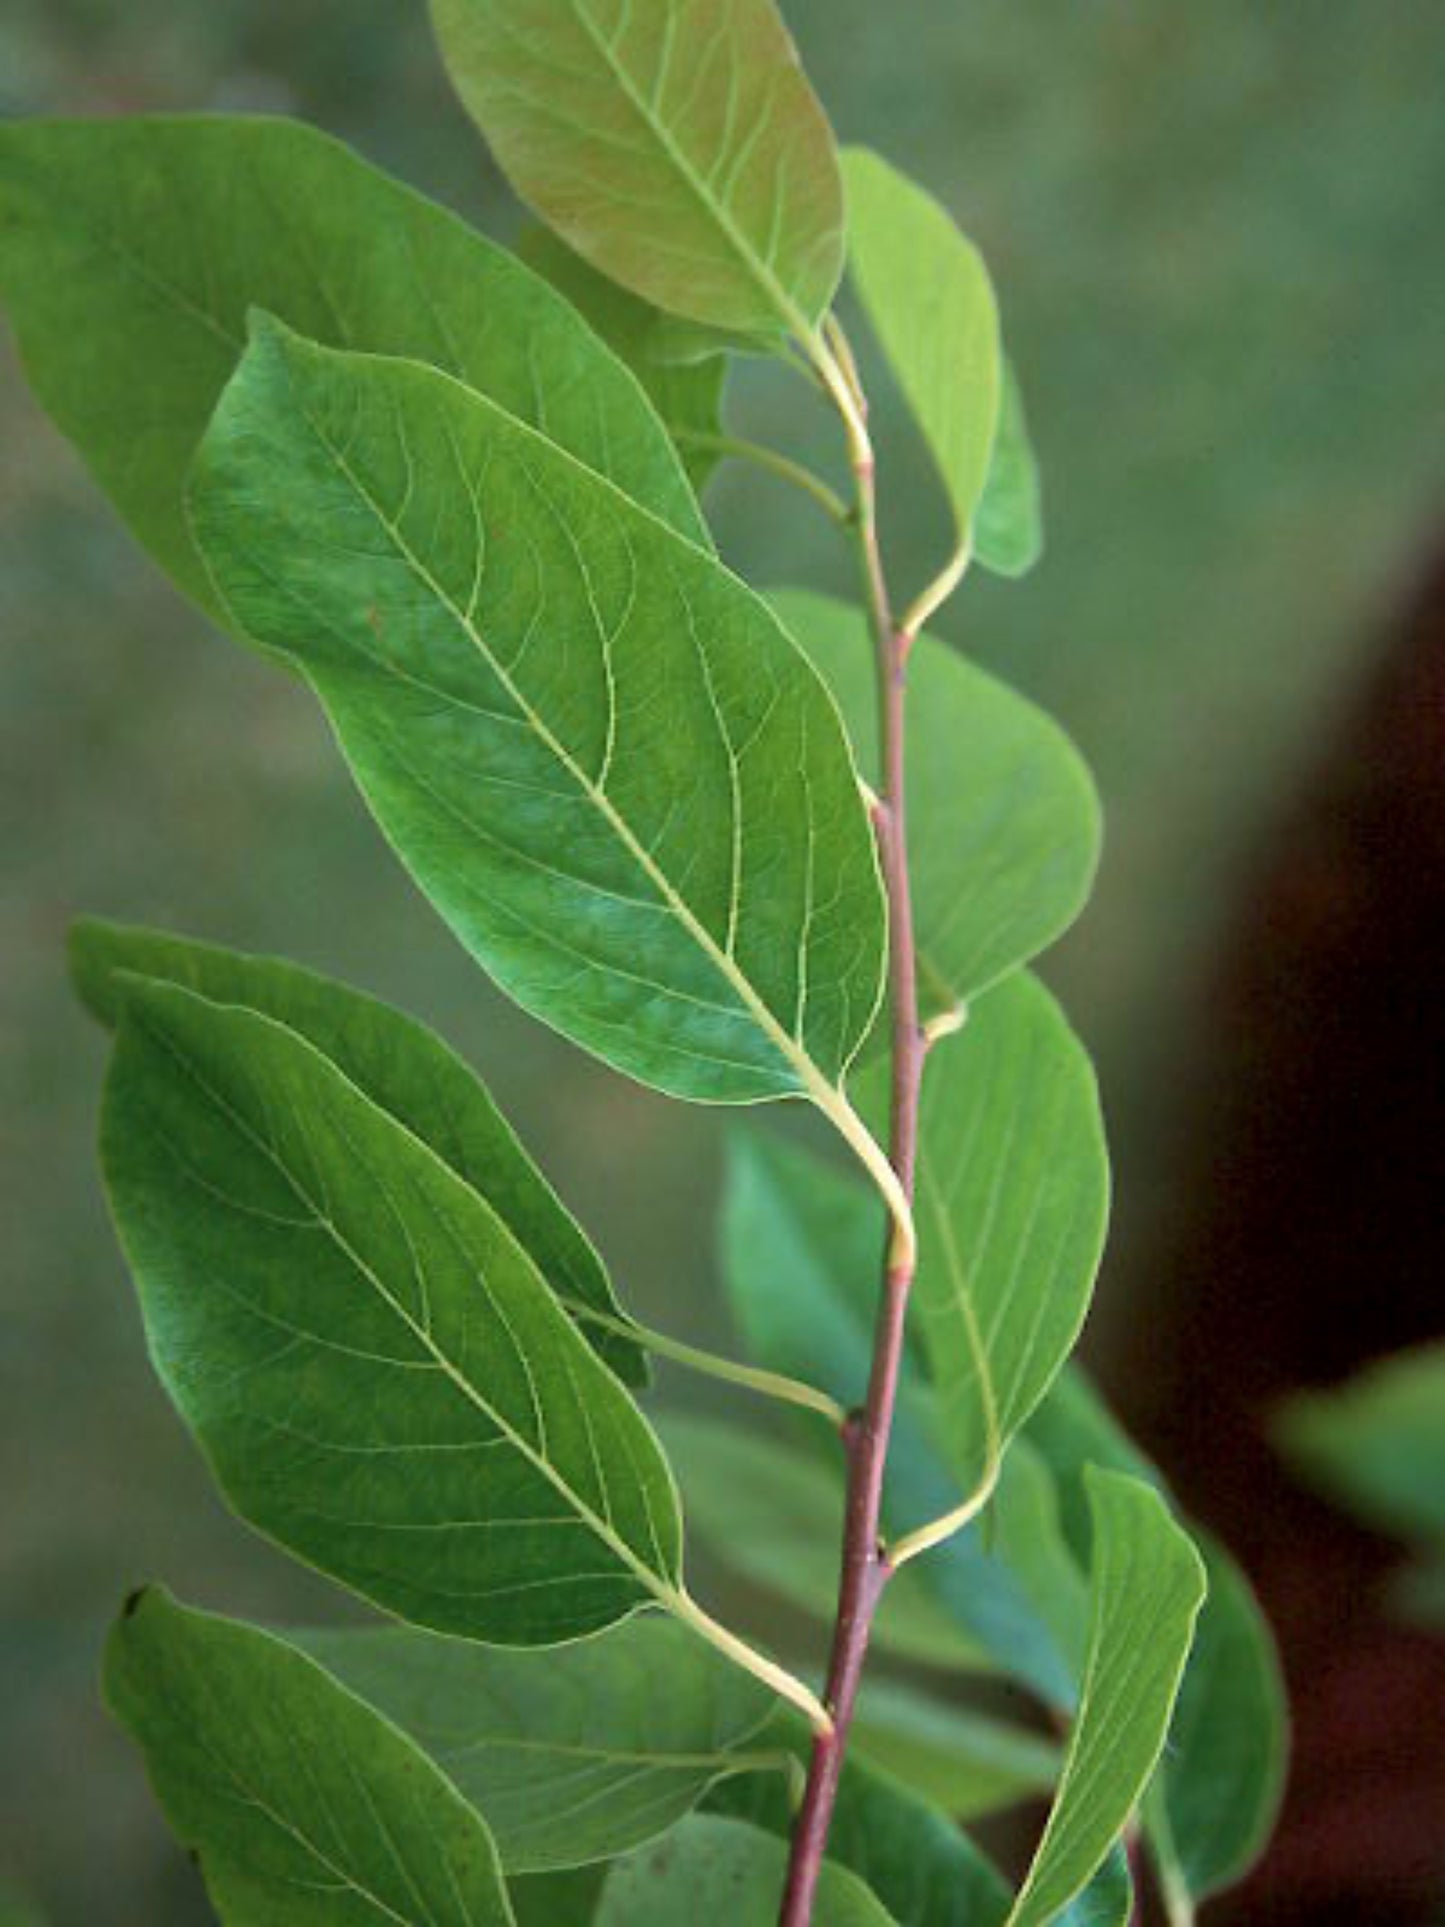 Diospyros Virginiana " persimmon" is the host plant for the Luna Moth ( Asctias Luna)